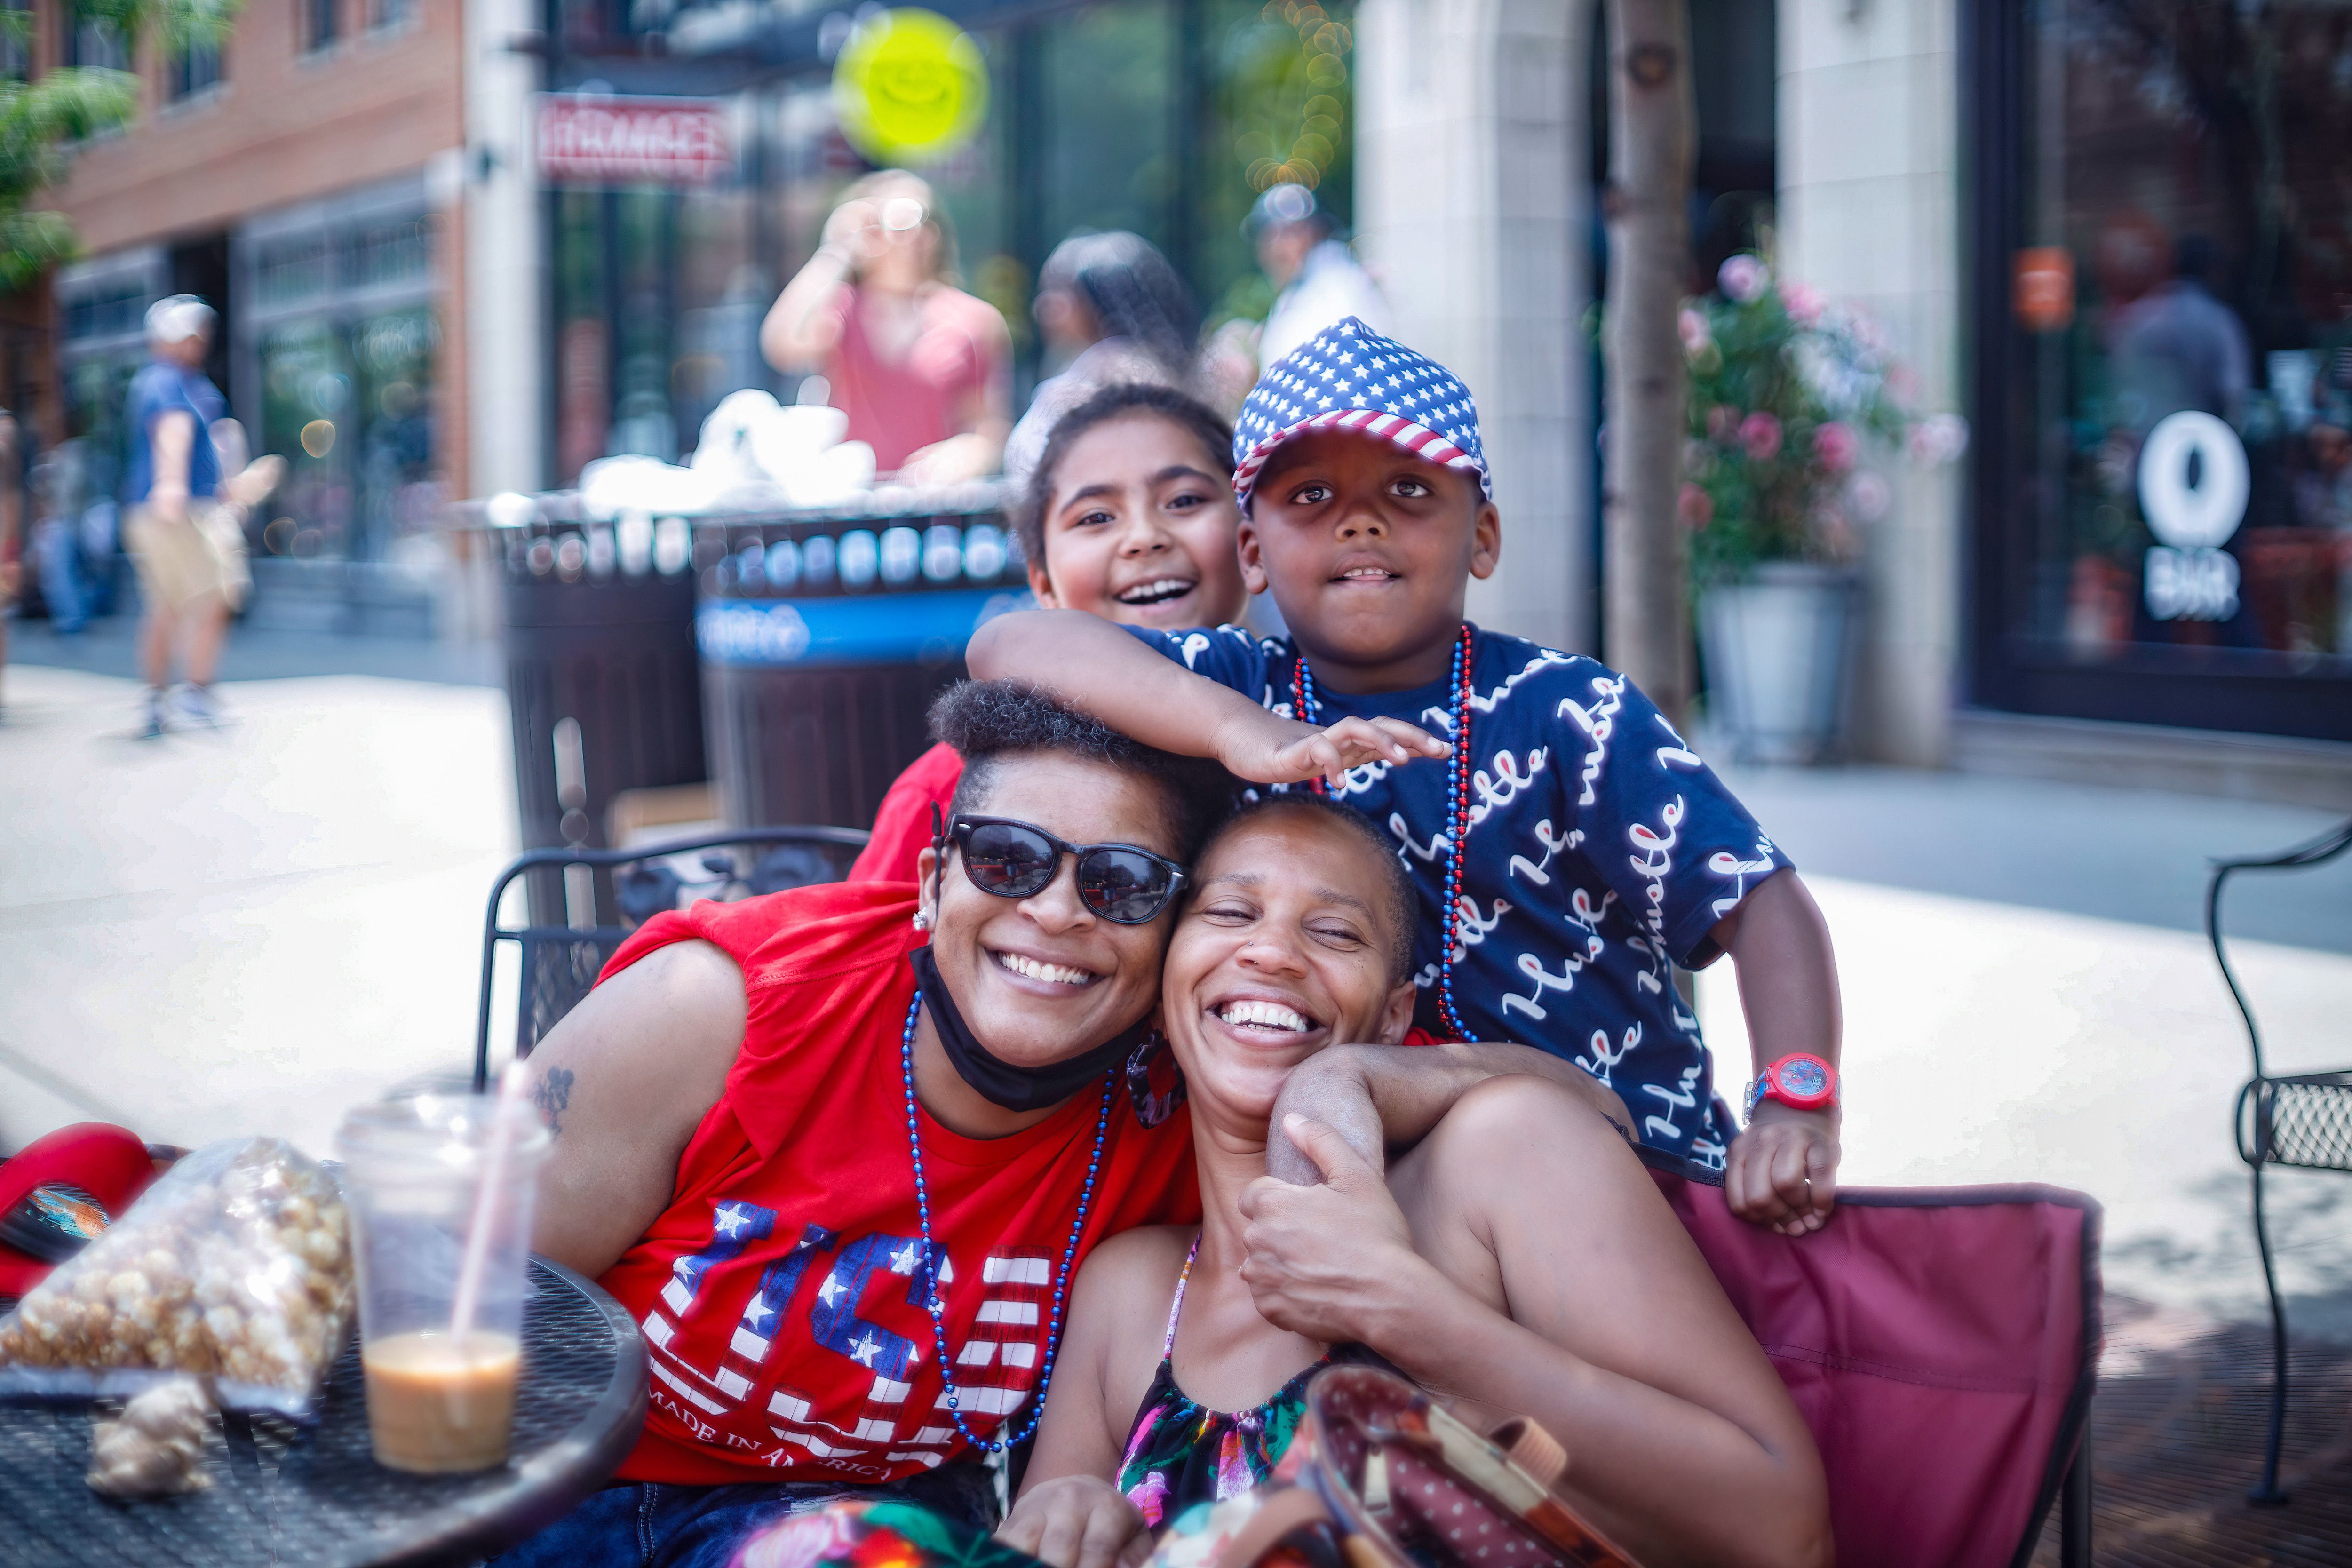 A family celebrates July 4 at a "Doo Dah Parade" in Columbus. 